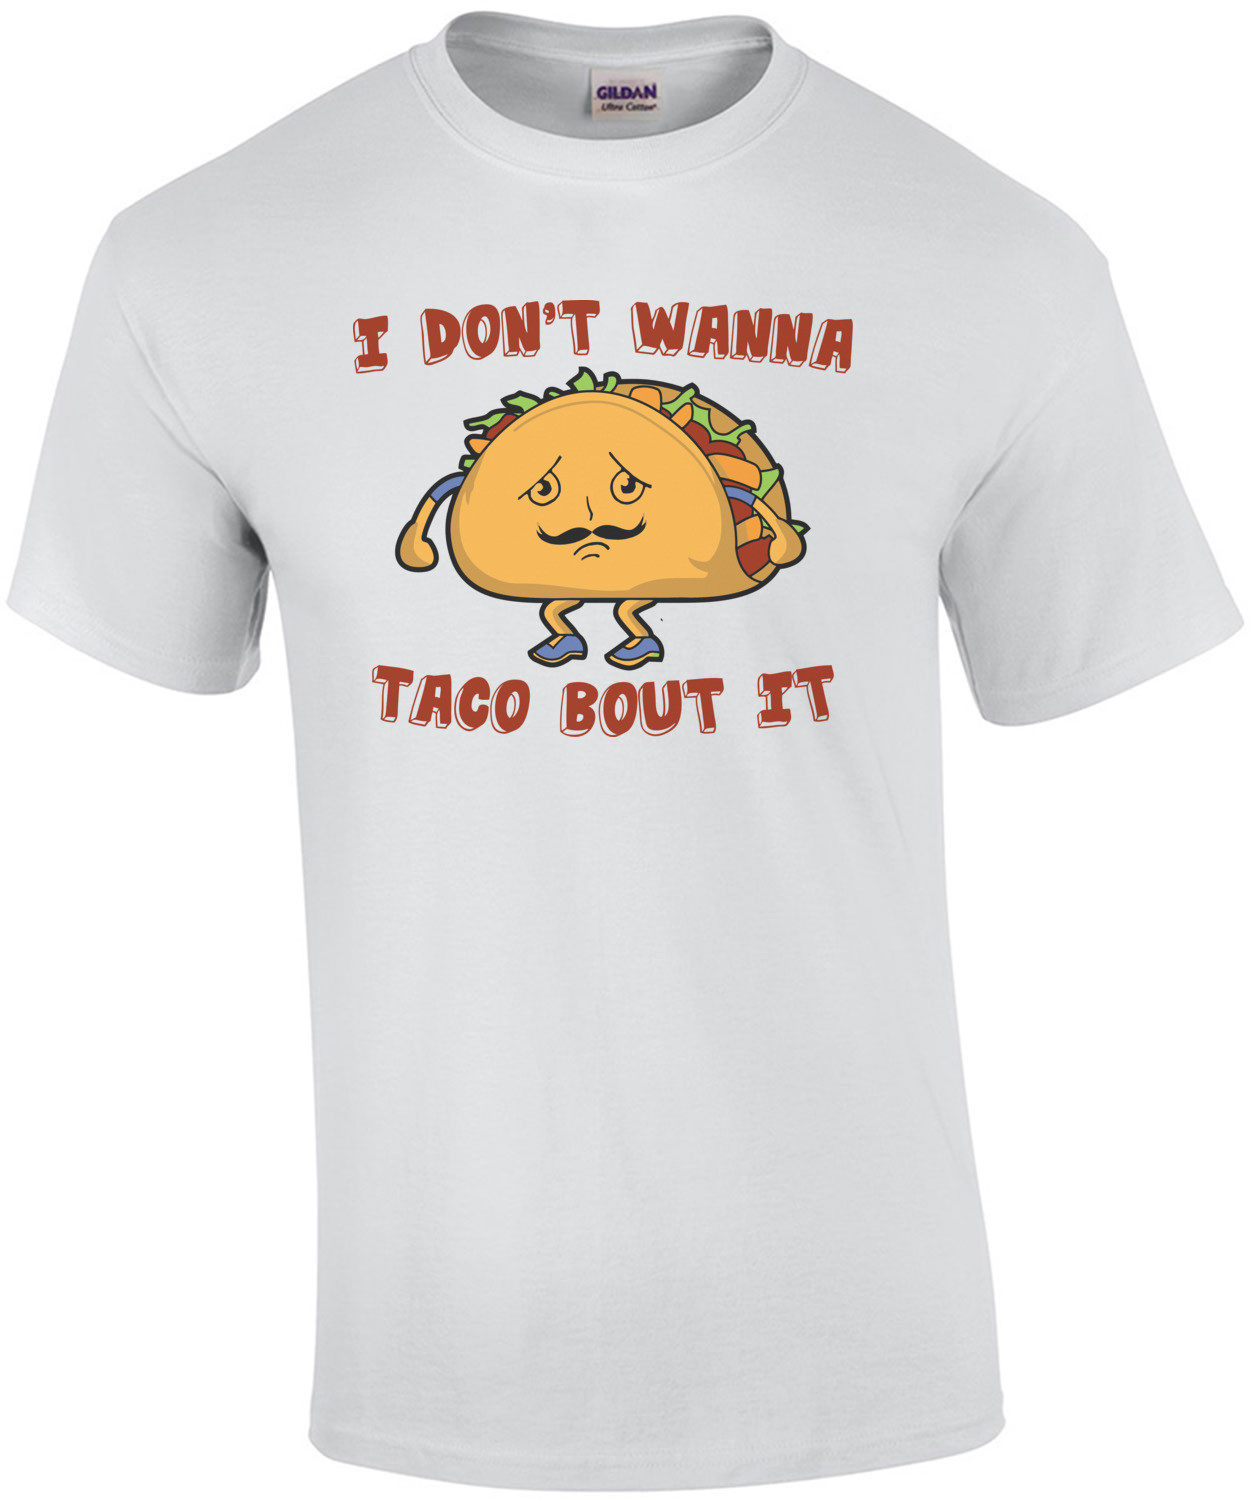 I Don't Wanna Taco Bout It Shirt